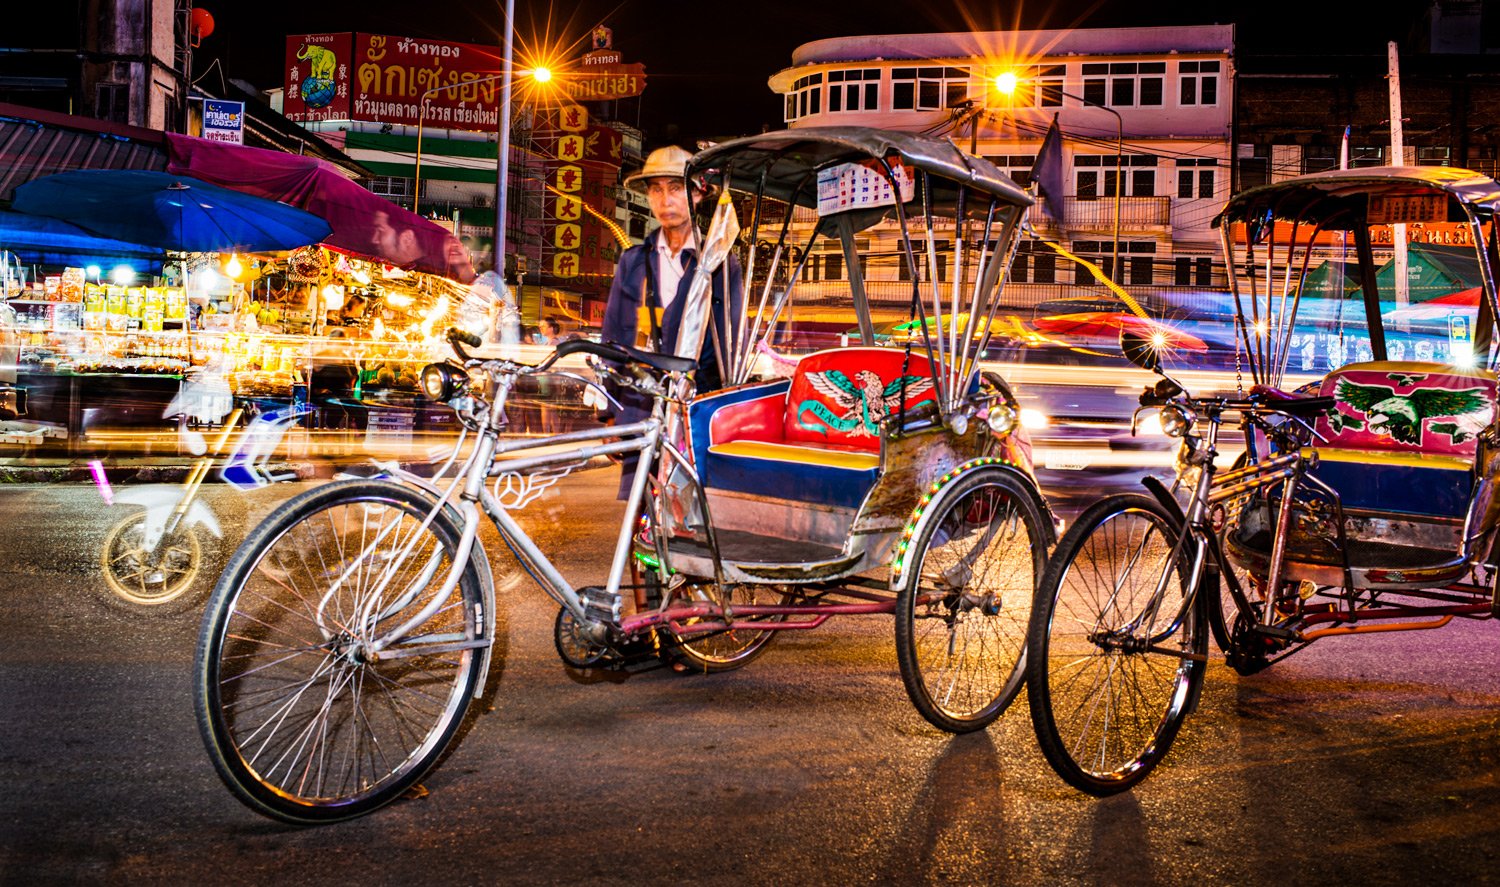 Portfolio of KevinLJ © Kevin Landwer-Johan Night Tricycle Taxi Chiang Mai Thailand